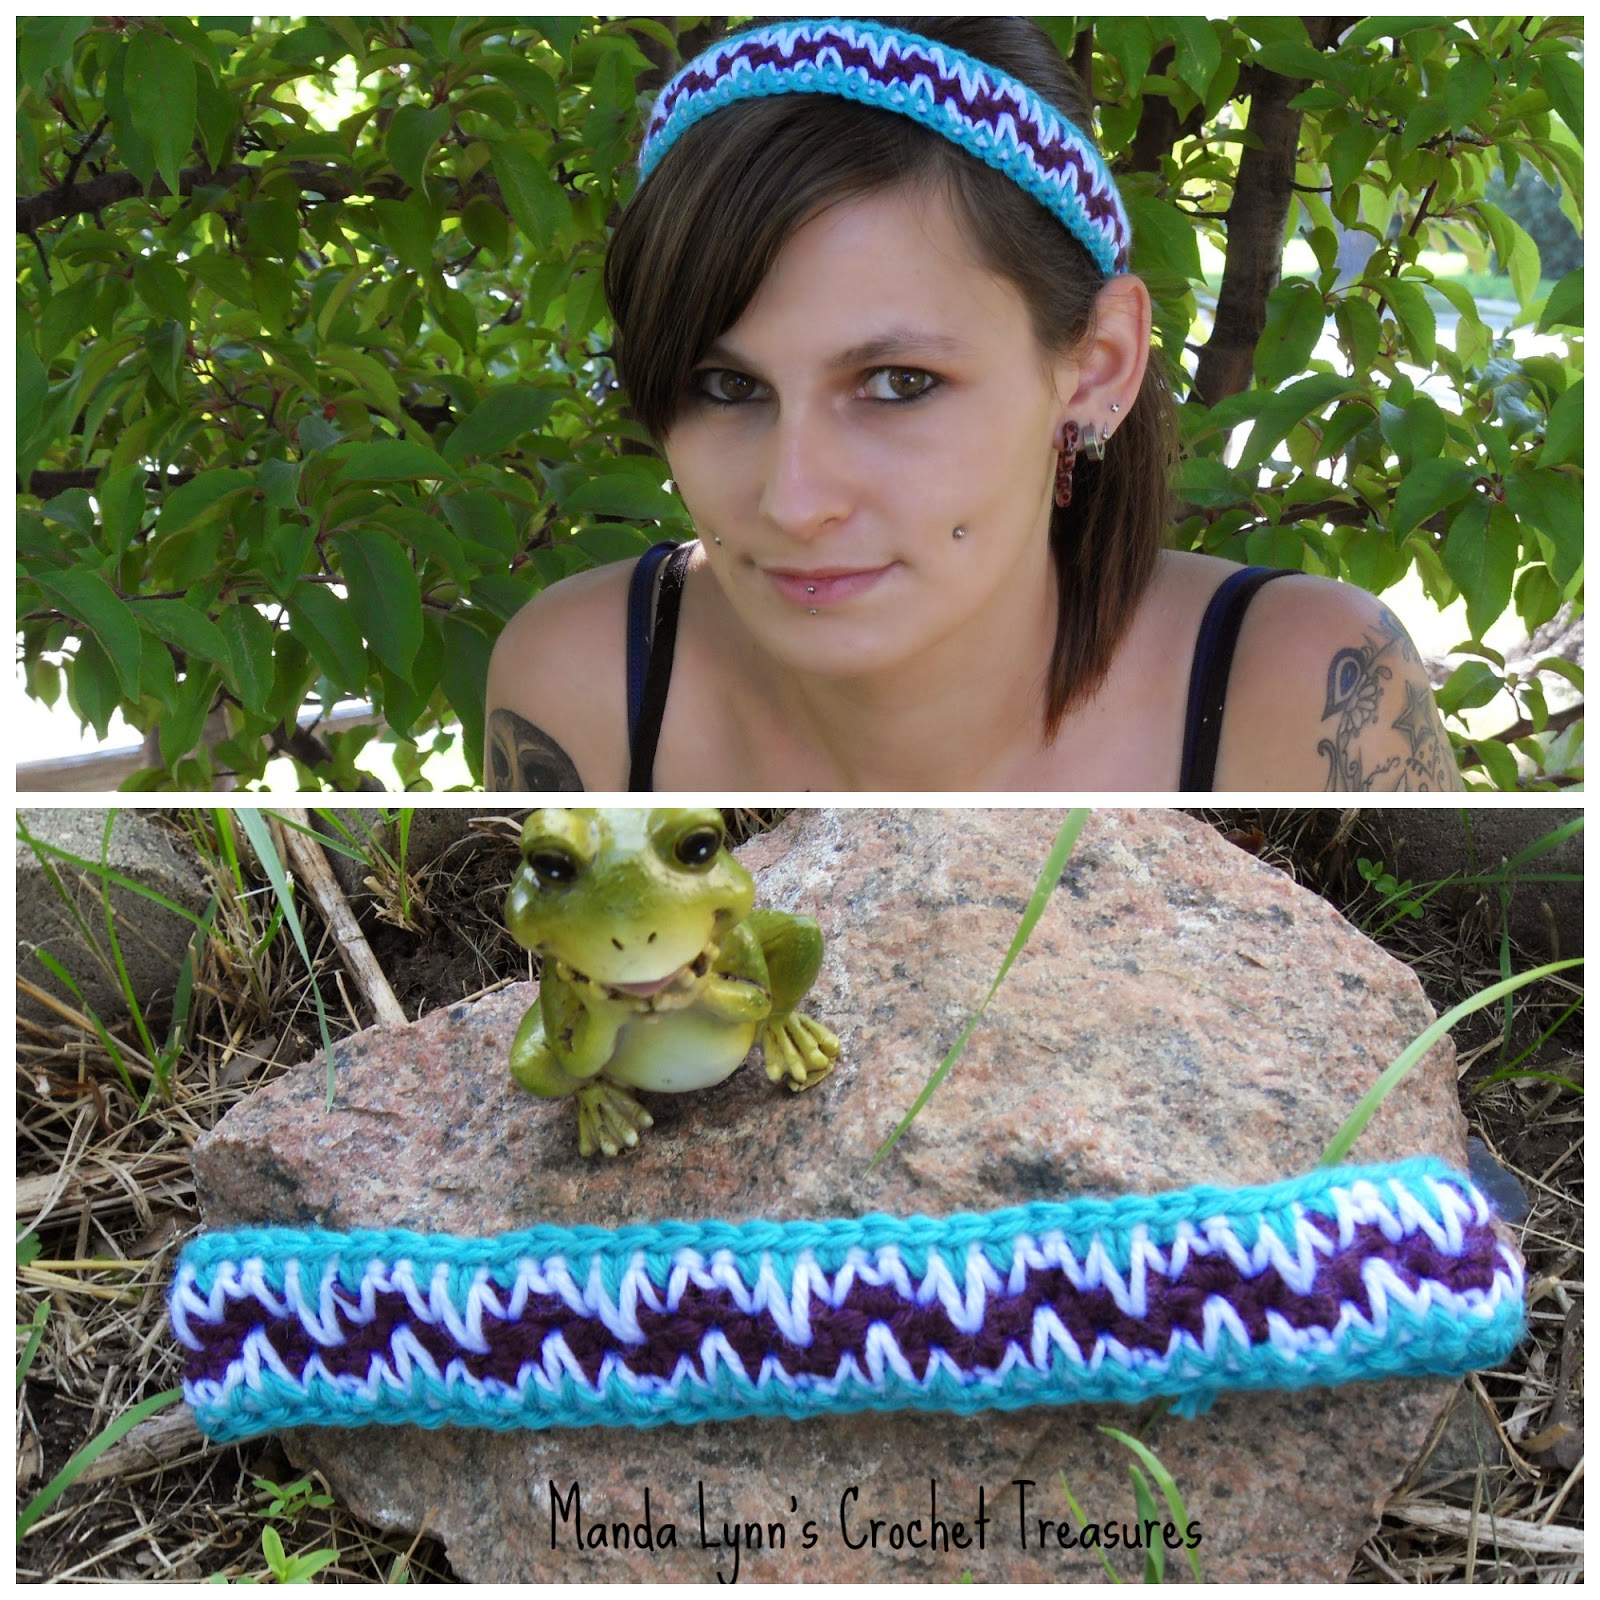 MandaLynn's Crochet Treasures : Crochet Layered Spike Stitch Headband